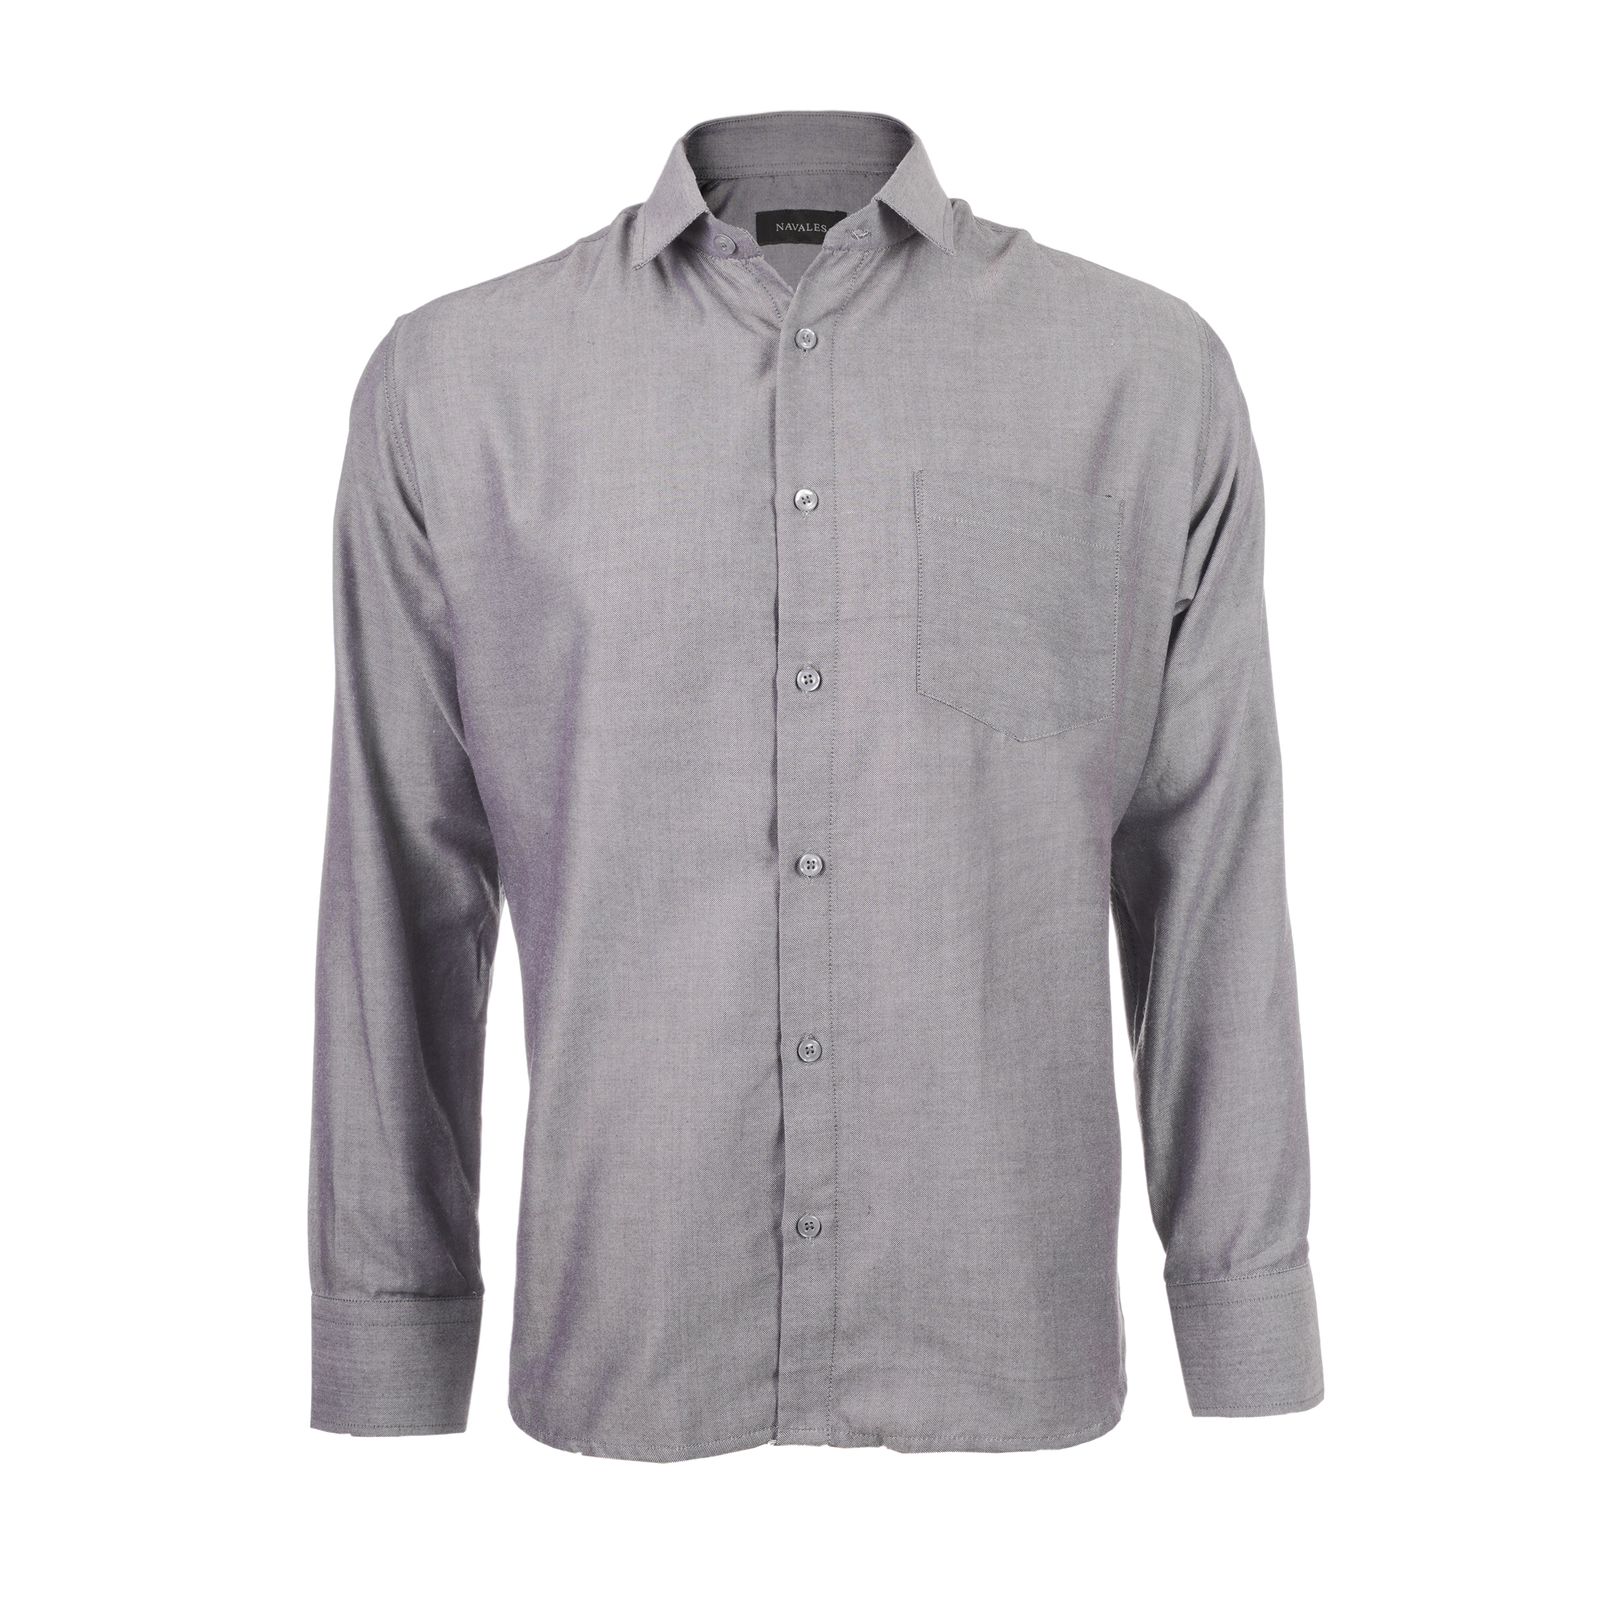 پیراهن آستین بلند مردانه ناوالس مدل Pk3-8020-GY -  - 1